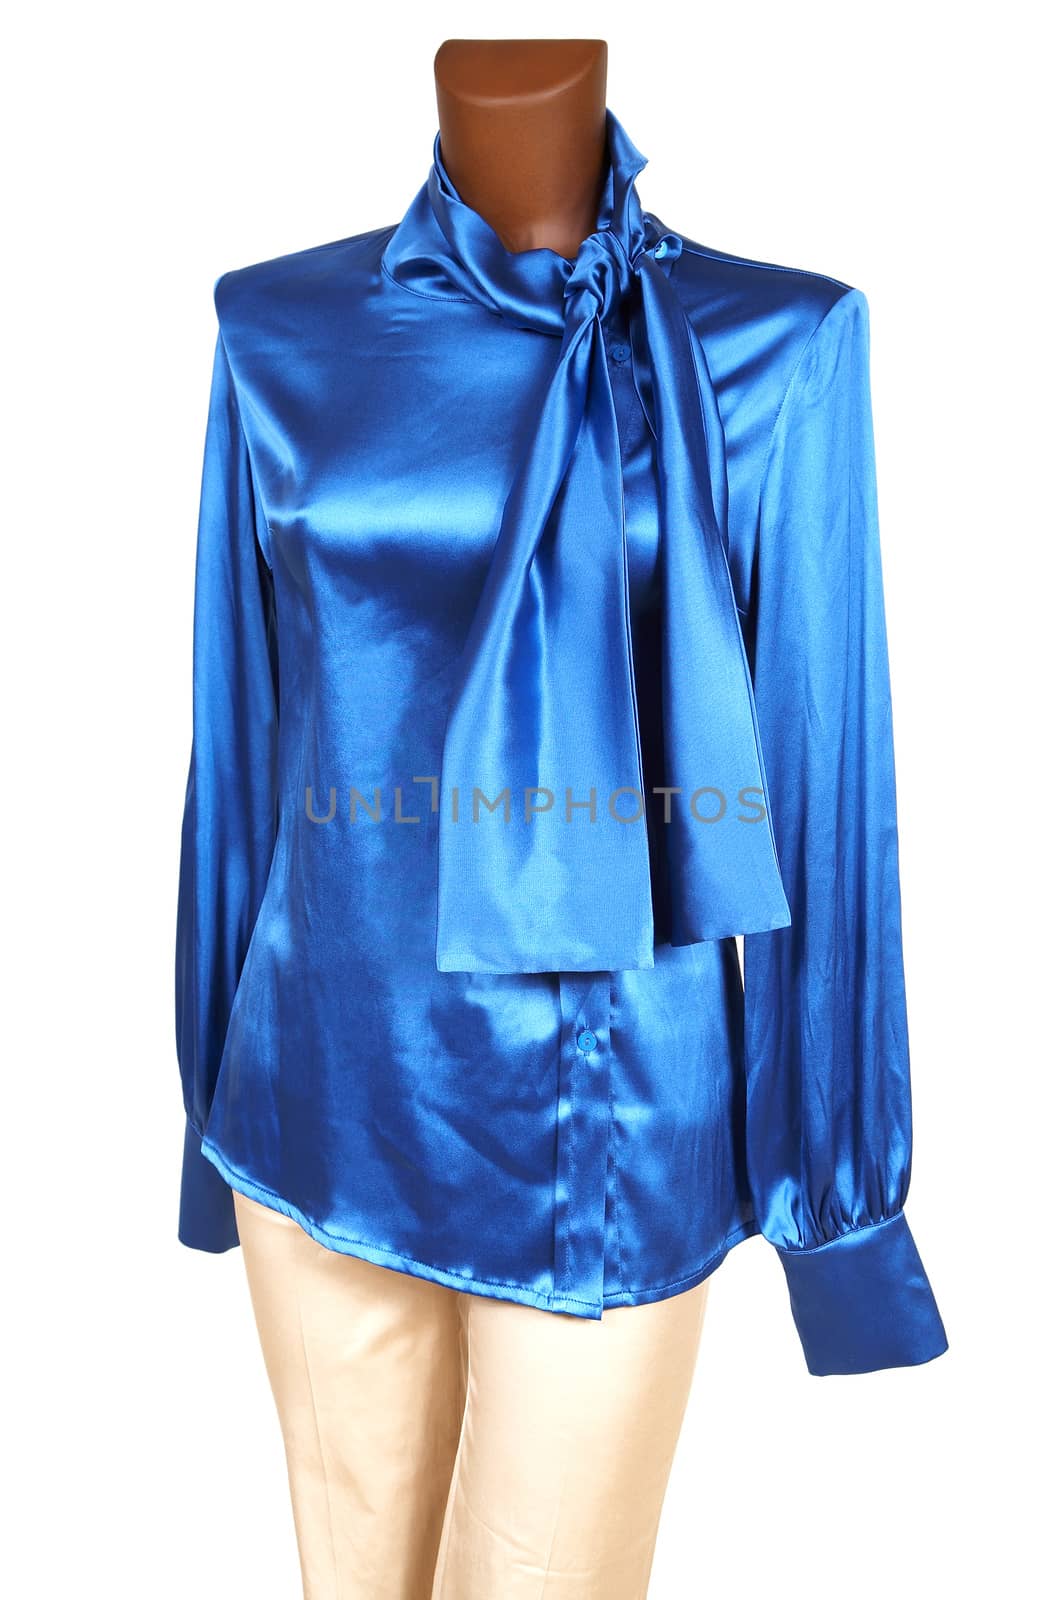 Blue silk blouse by terex